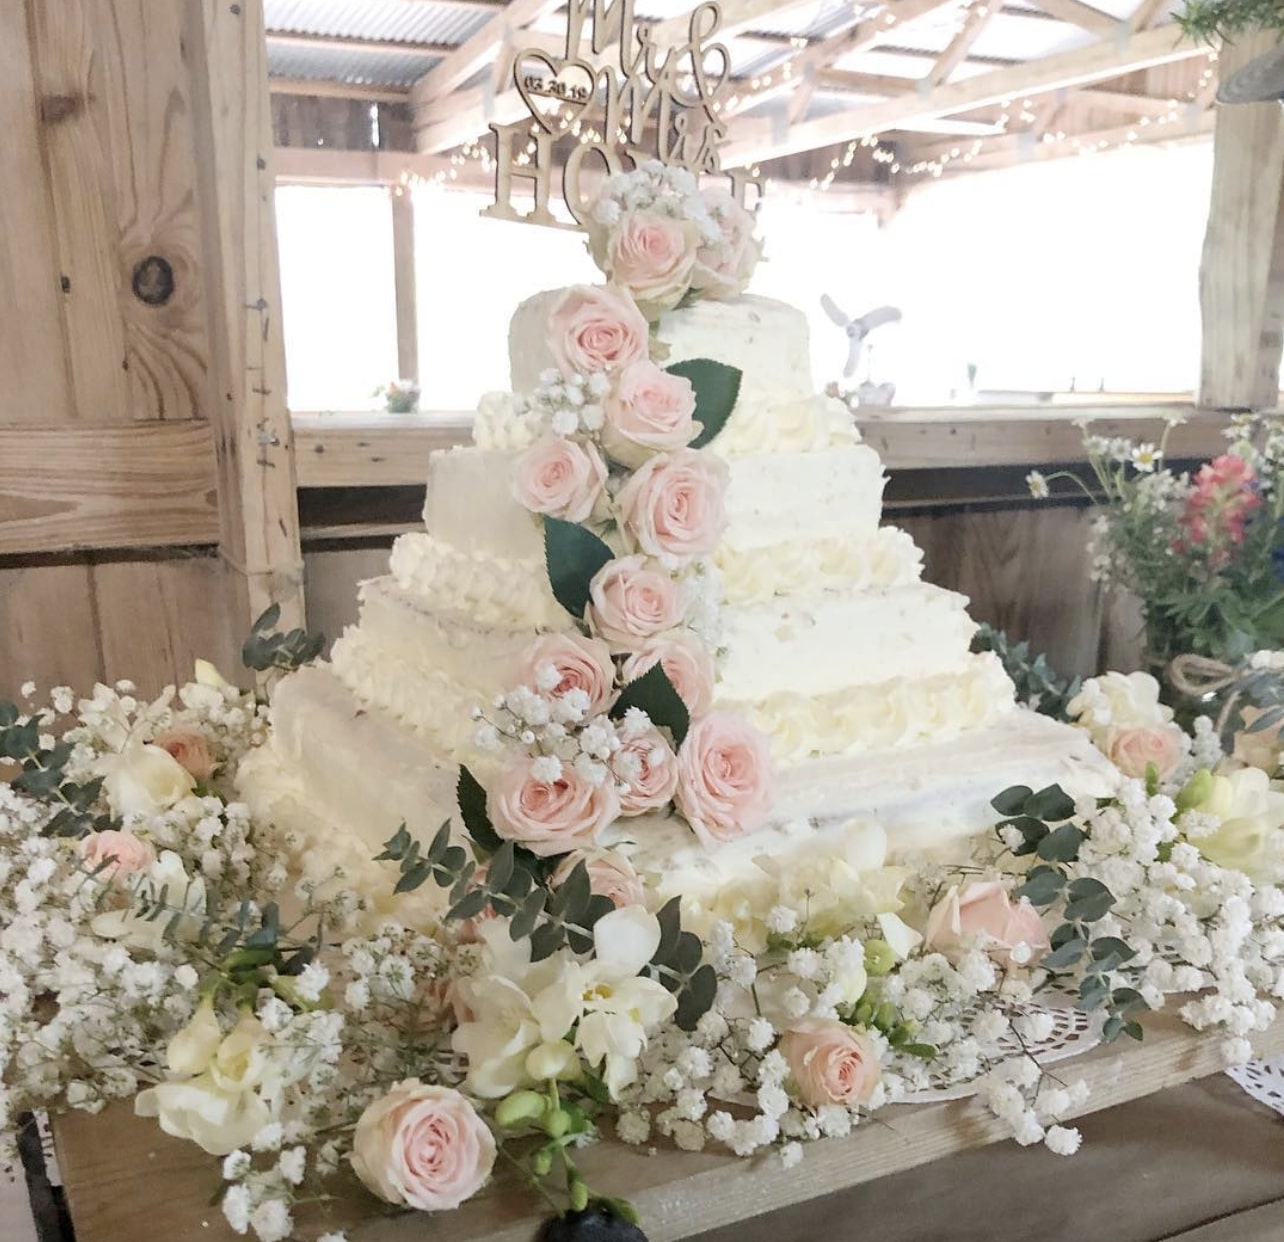 Couple Turns Costco Sheet Cakes Into Huge, Beautiful Wedding Cake